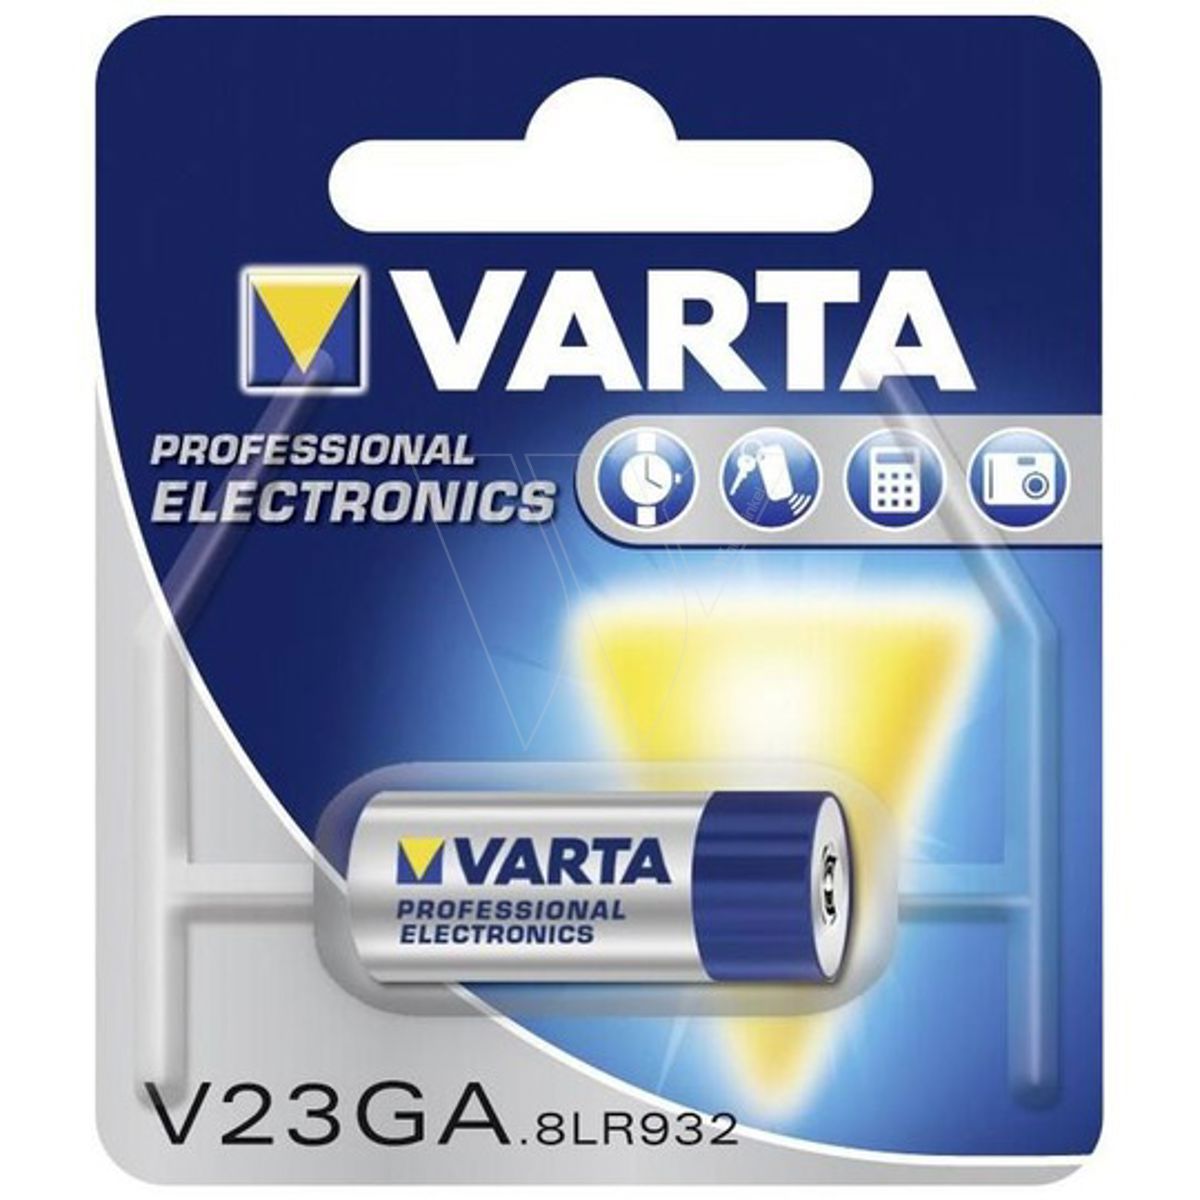 Openbaren interview Taille Varta batterij v23ga V23GA kopen? | Wolfswinkel uw Varta specialist